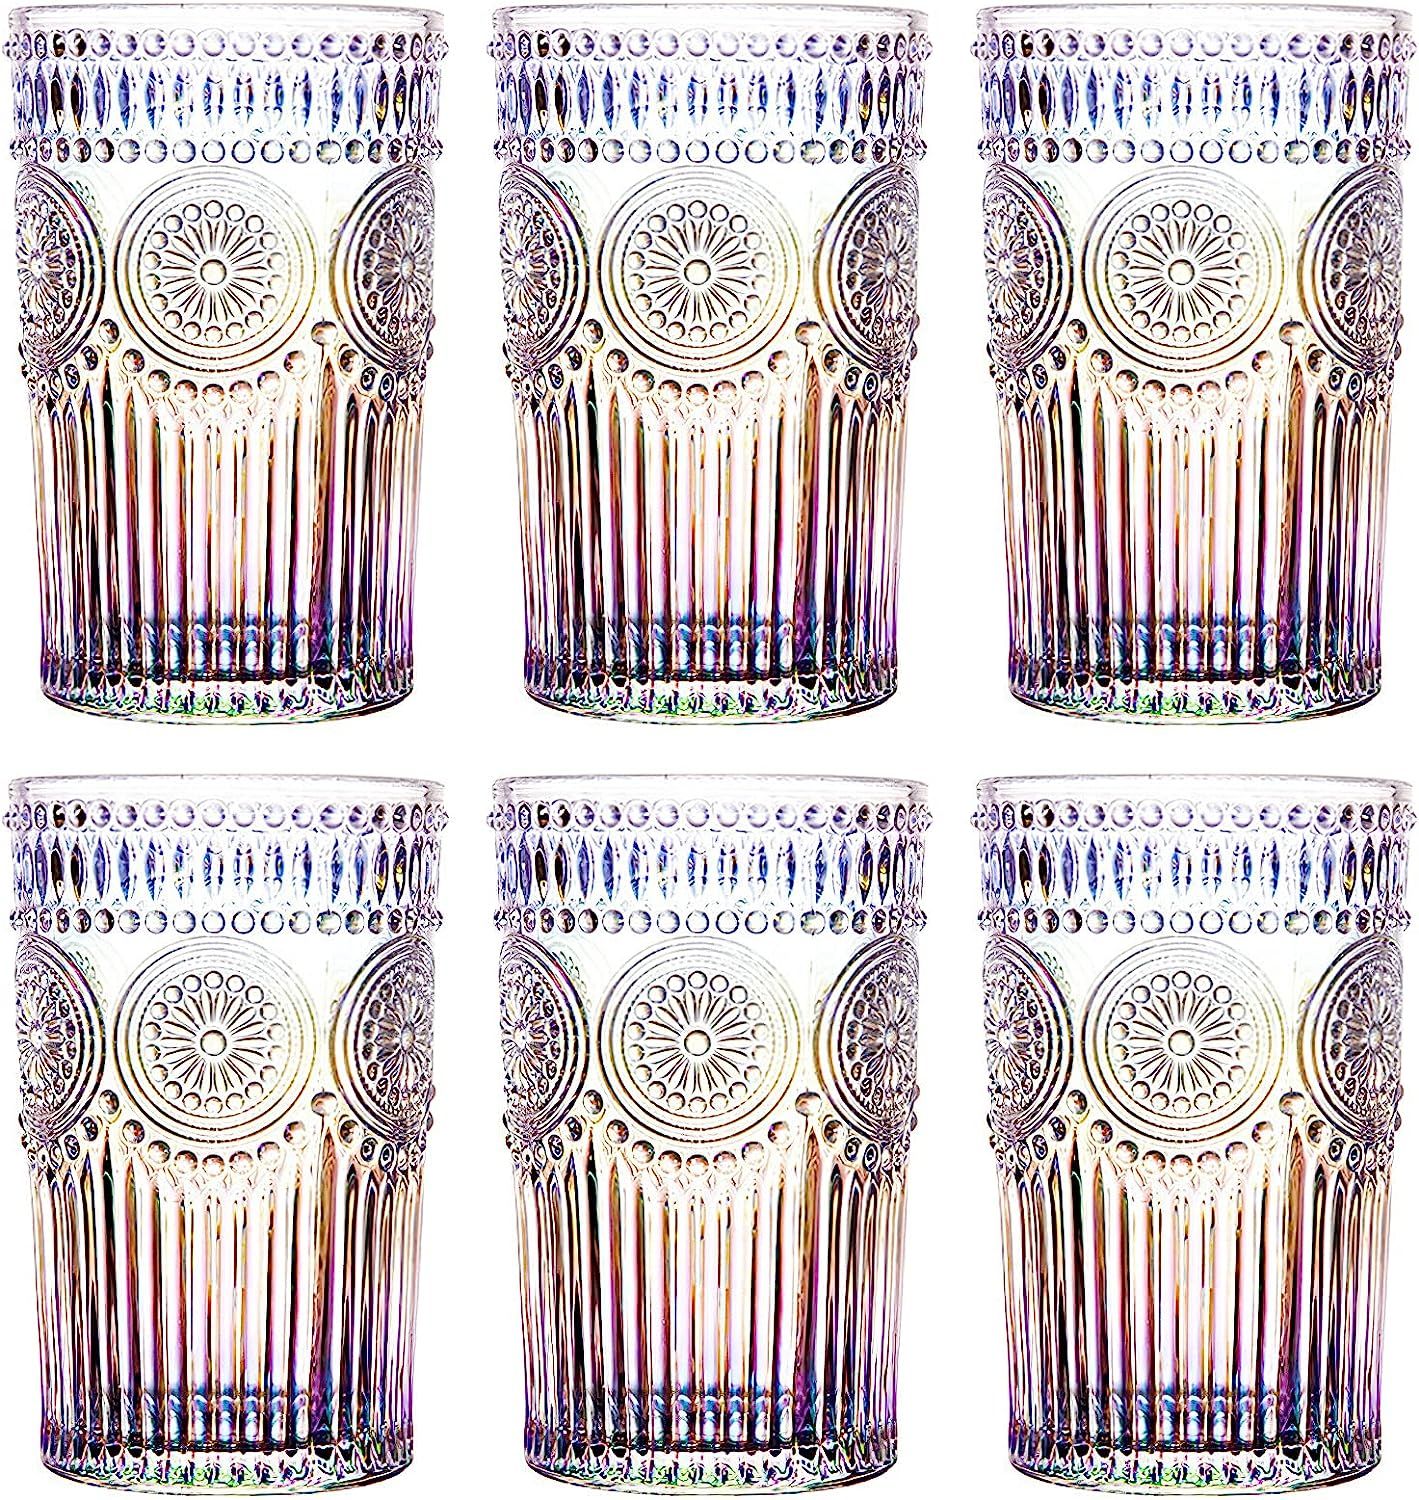 Kingrol 6 Pack 12 oz Romantic Water Glasses, Rainbow Drinking Glasses Tumblers, Vintage Glassware... | Amazon (US)